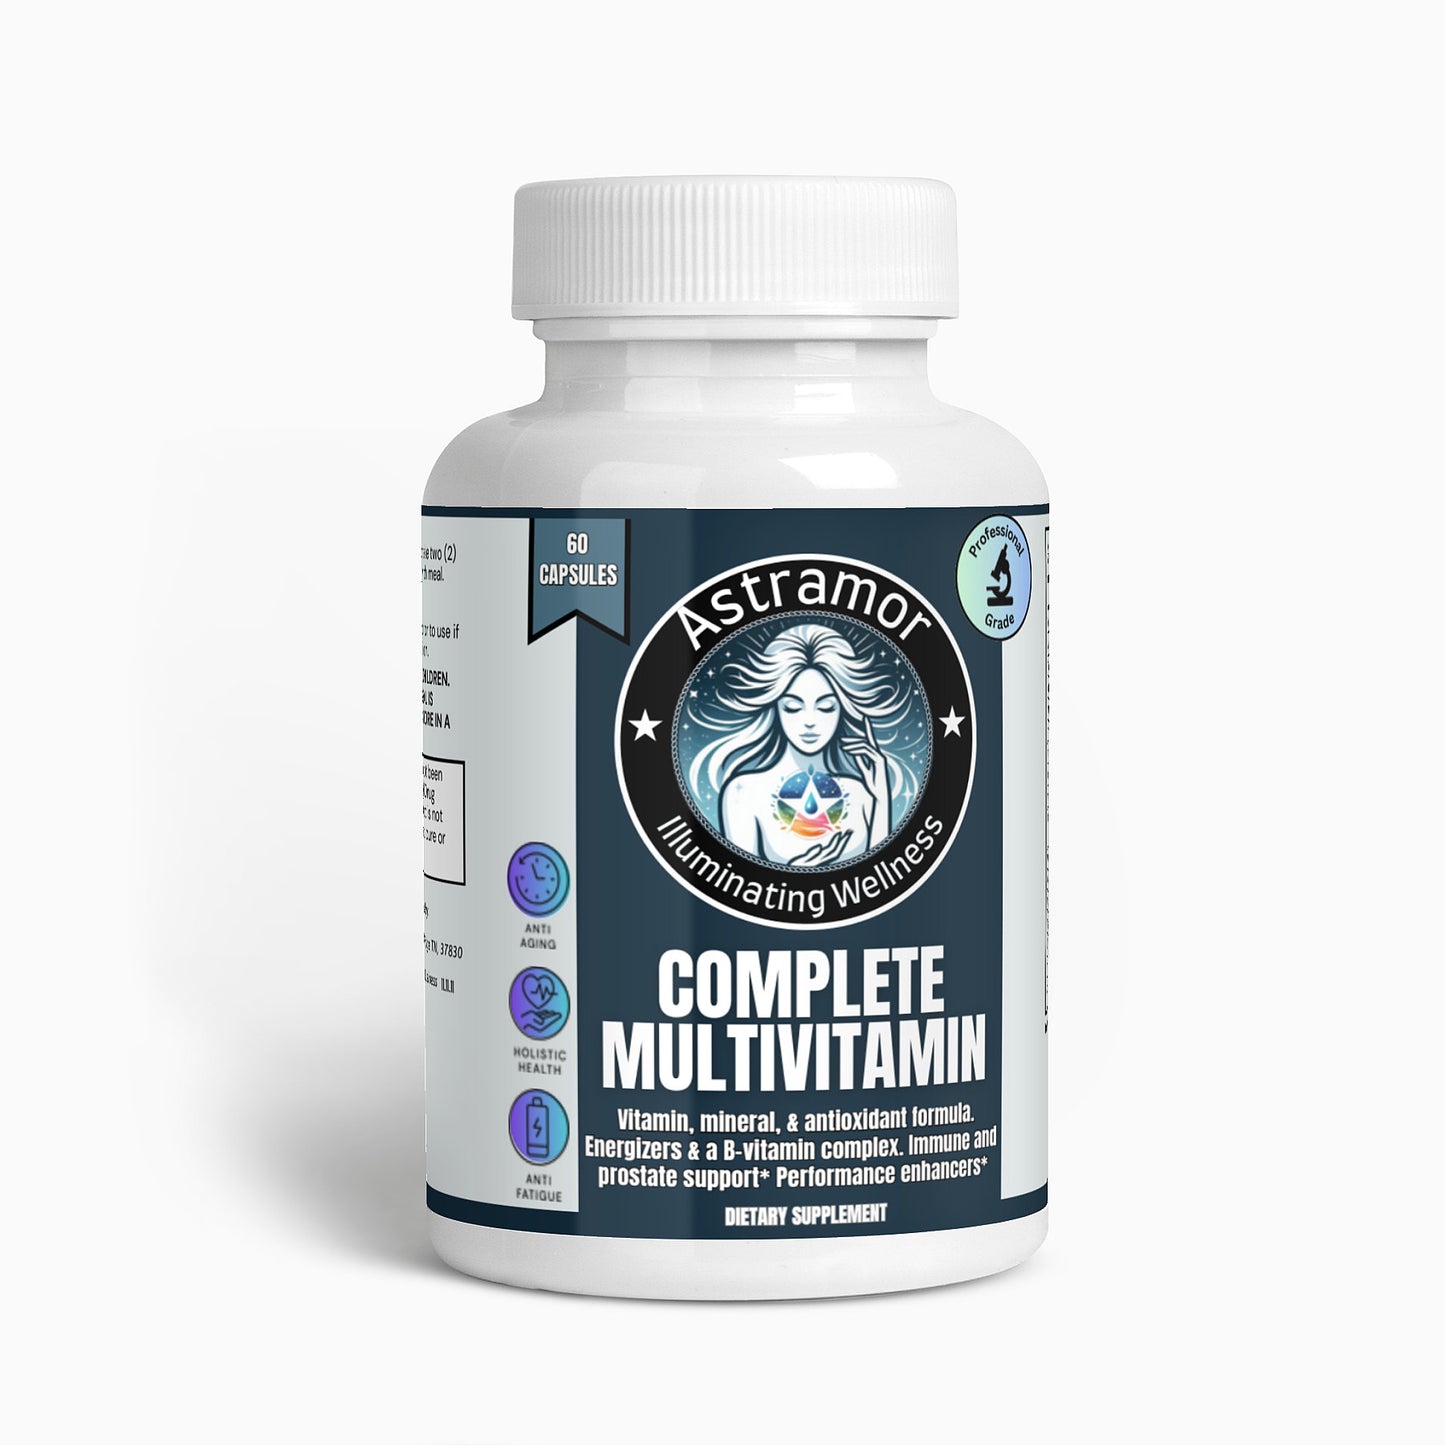 Astramor's Complete Multivitamin